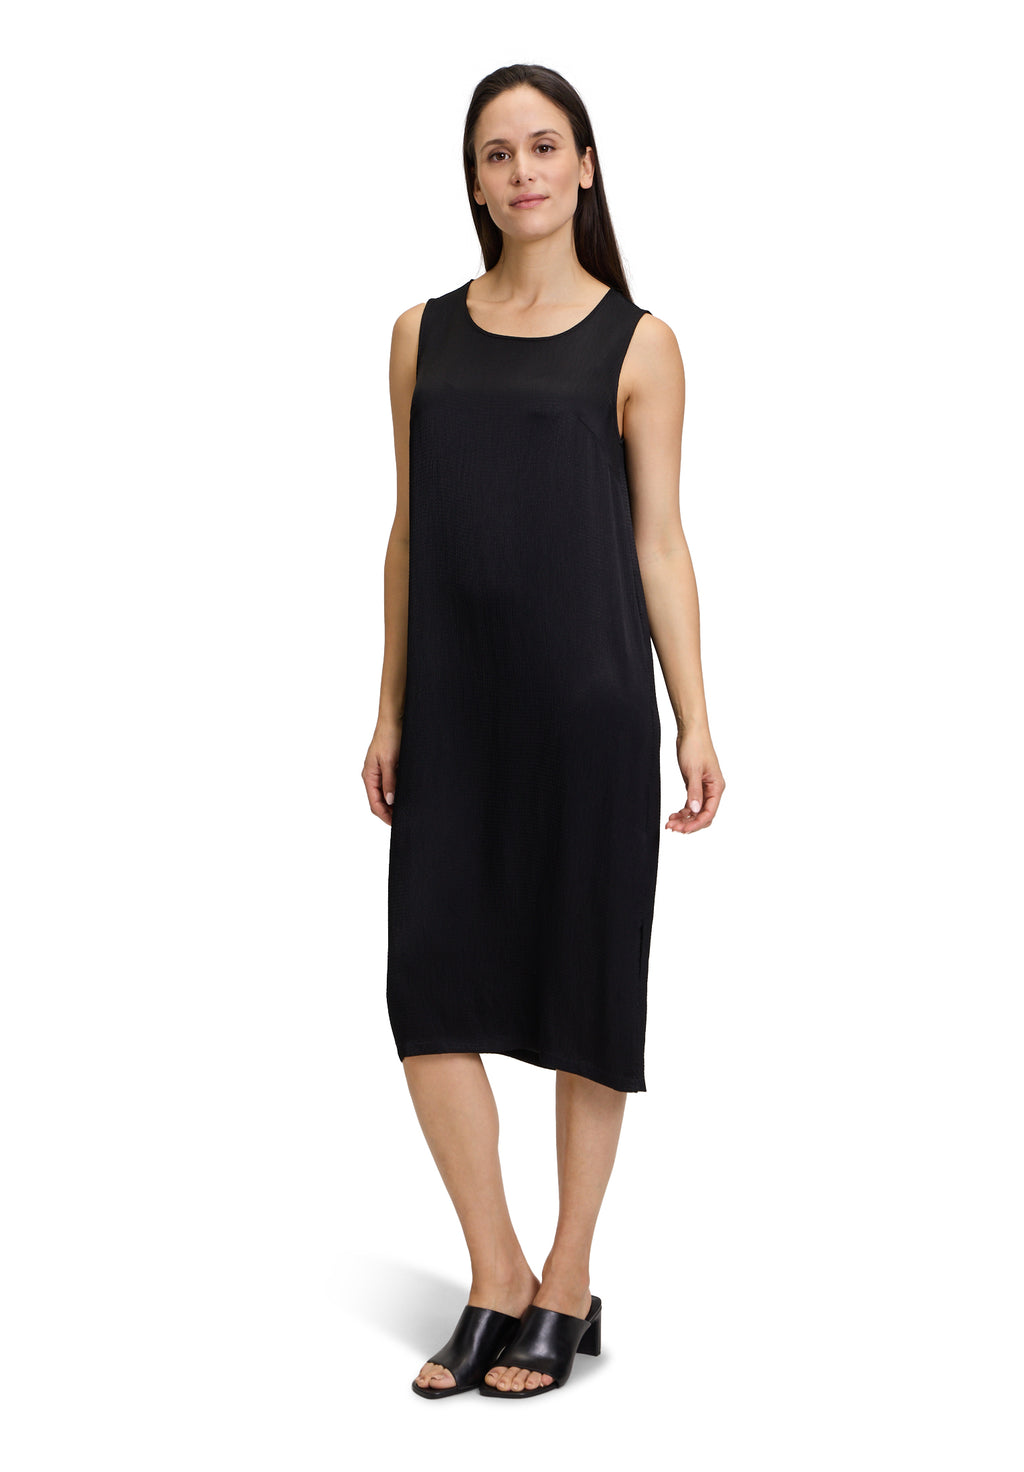 betty&co sleeveless slip dress in black (front)